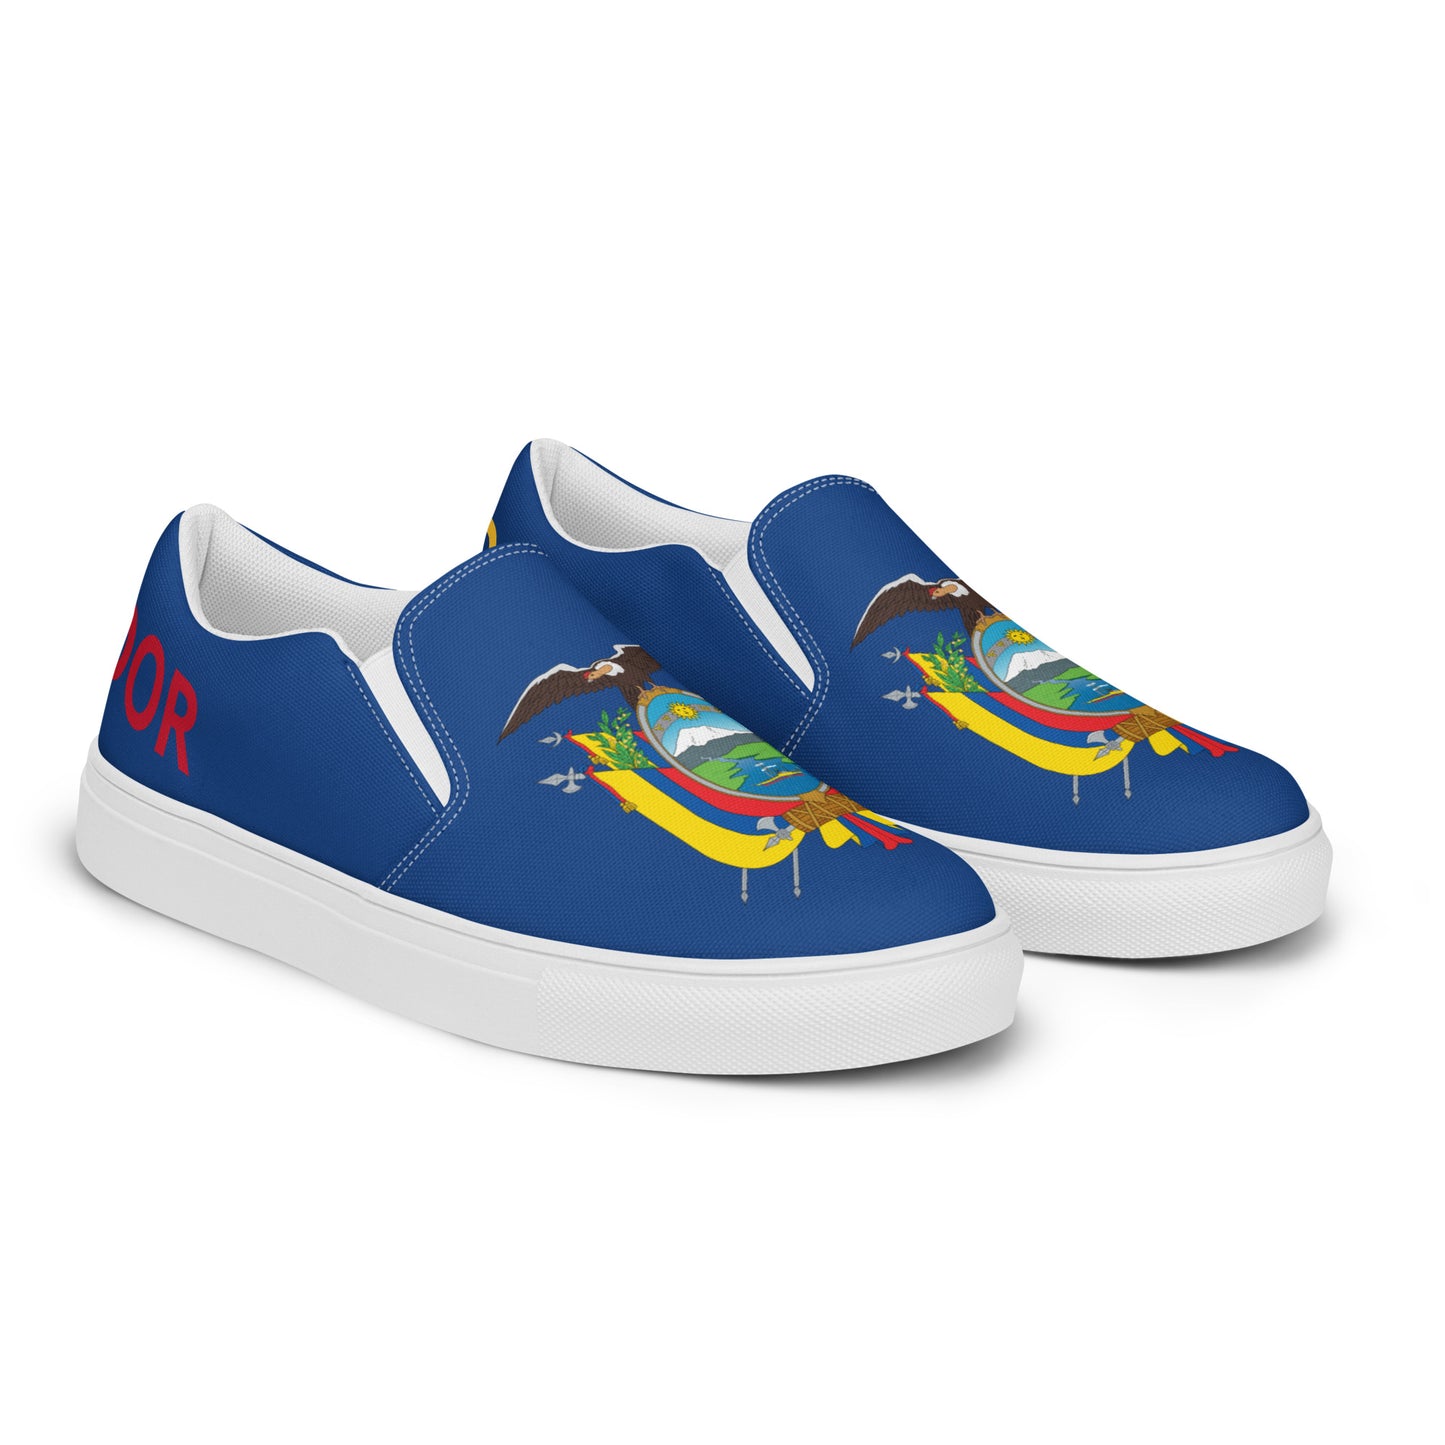 Ecuador - Men - Blue - Slip-on shoes